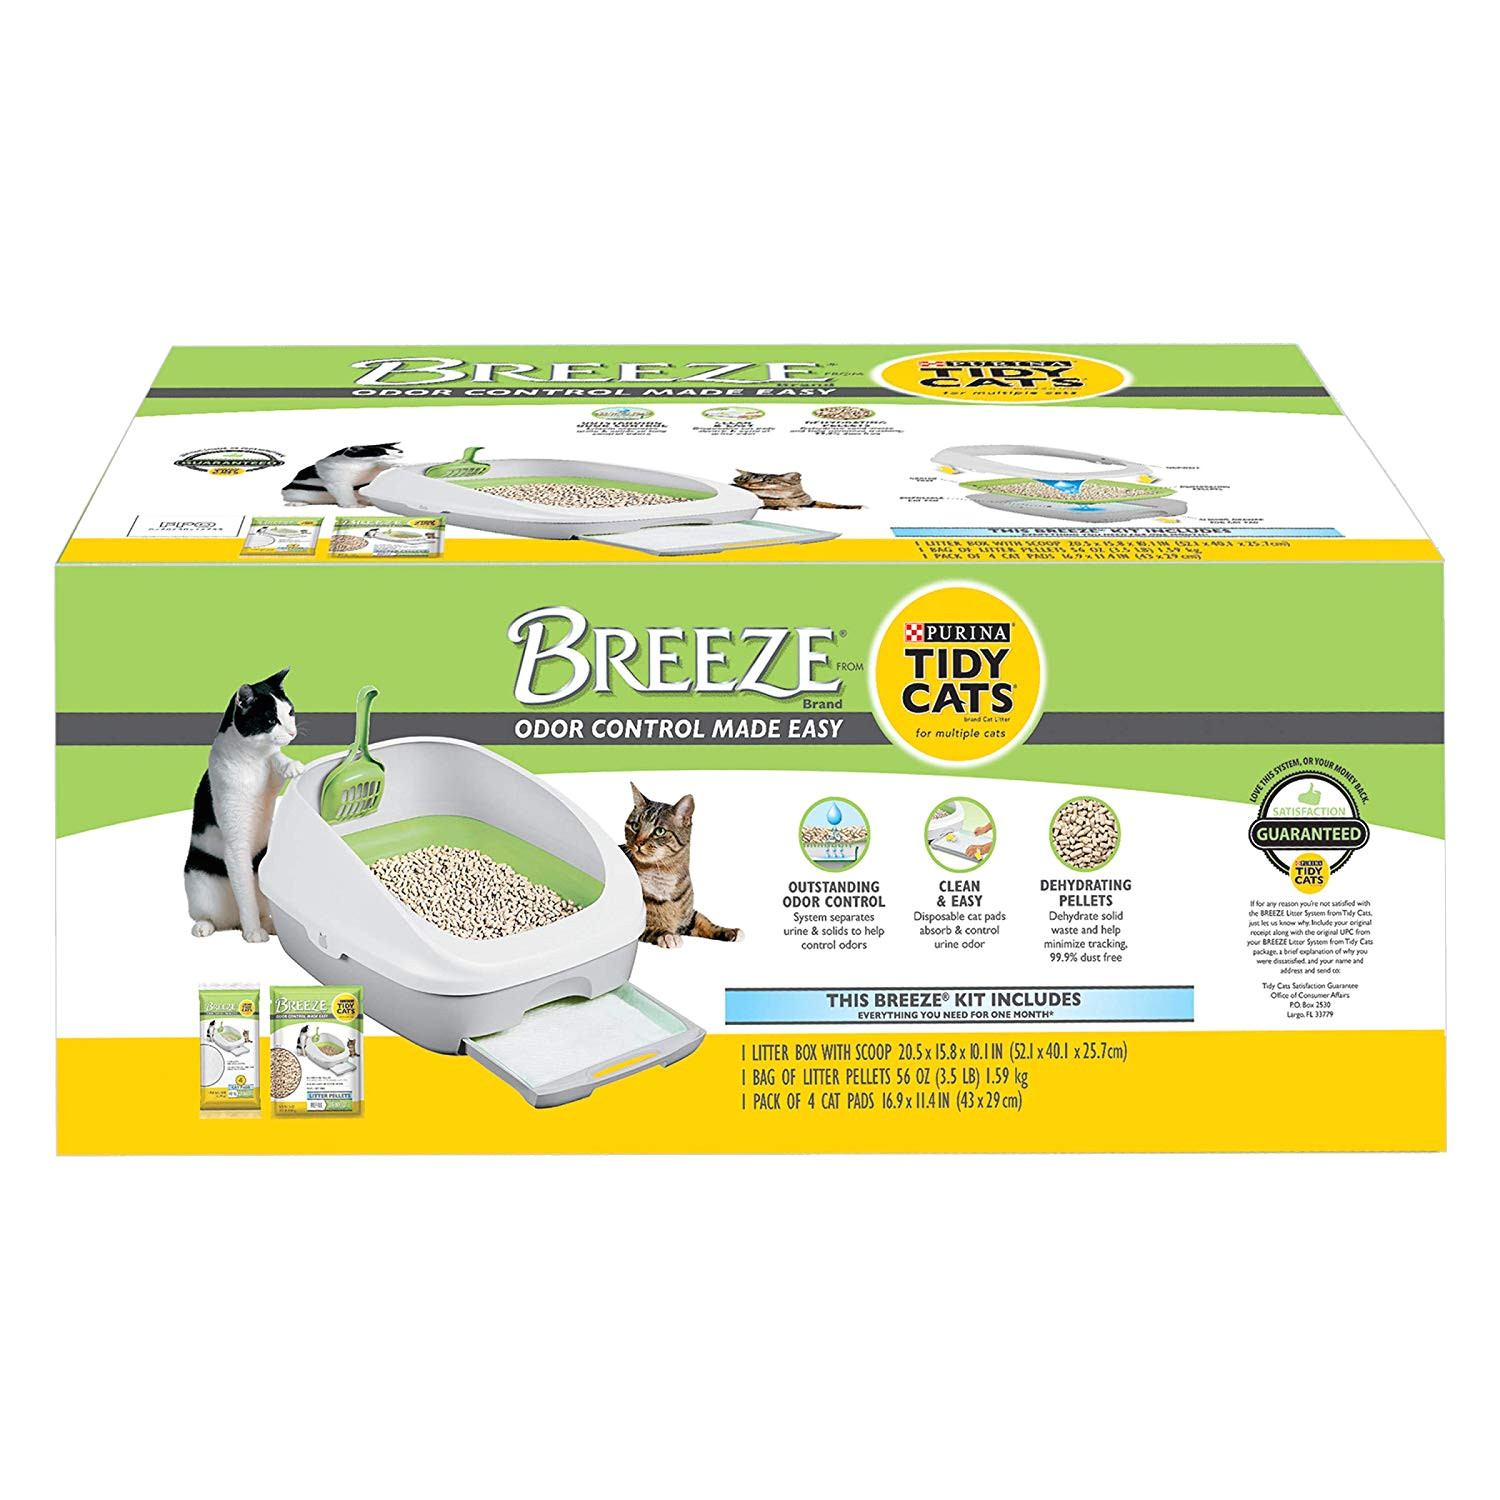 Breeze Odor Control Litter Box Reviews Amazon Com Purina Tidy Cats Breeze Cat Litter System Starter Kit